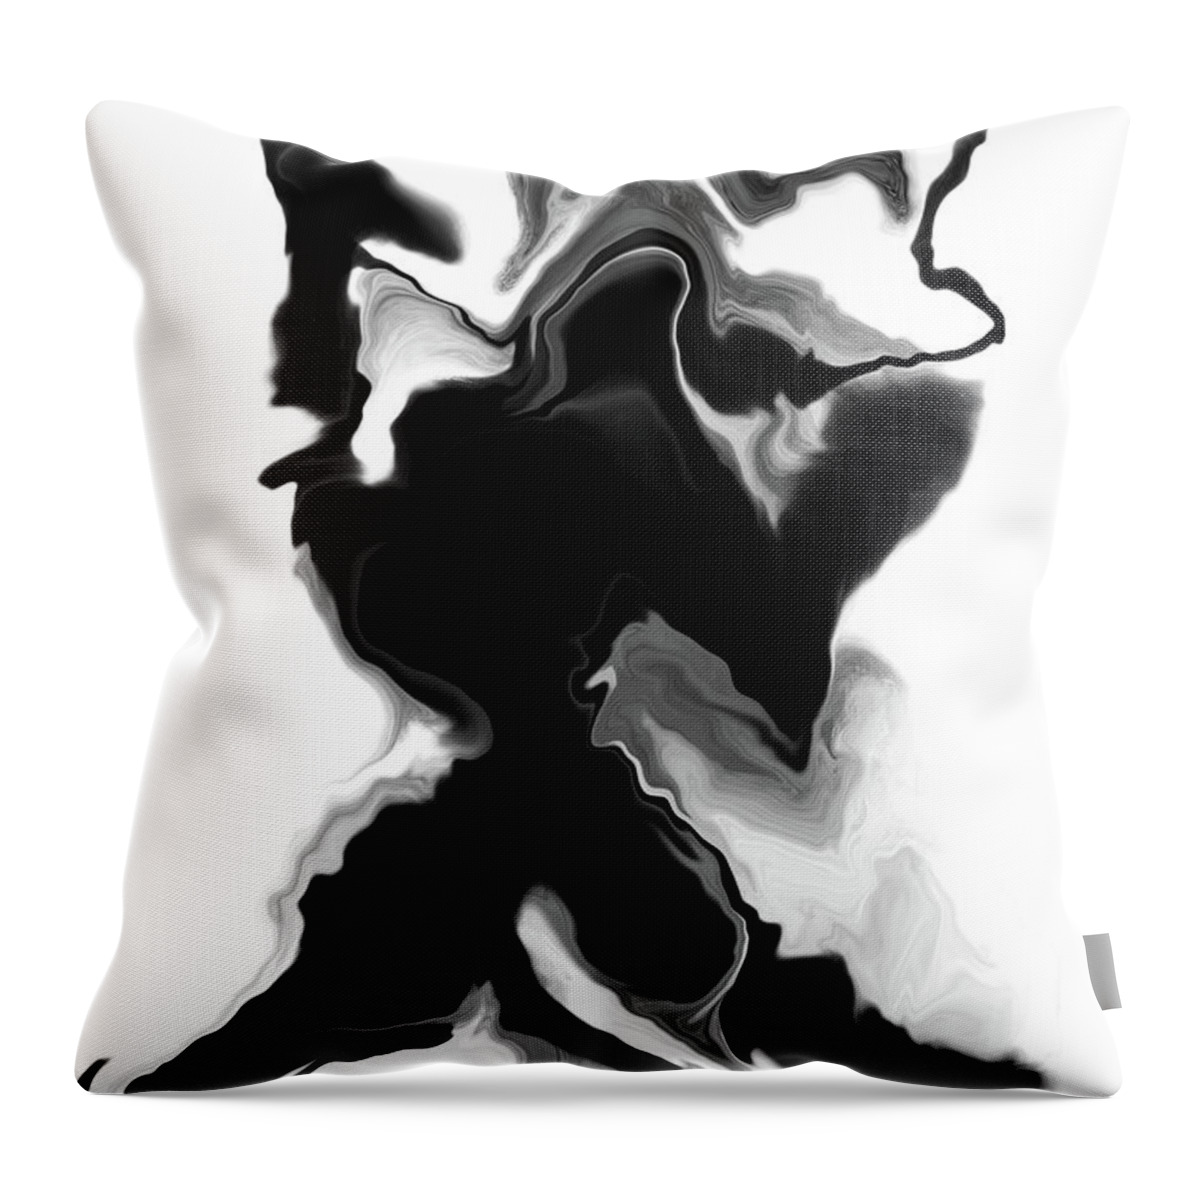 Black Art Throw Pillow featuring the digital art Unbound by D Justin Johns